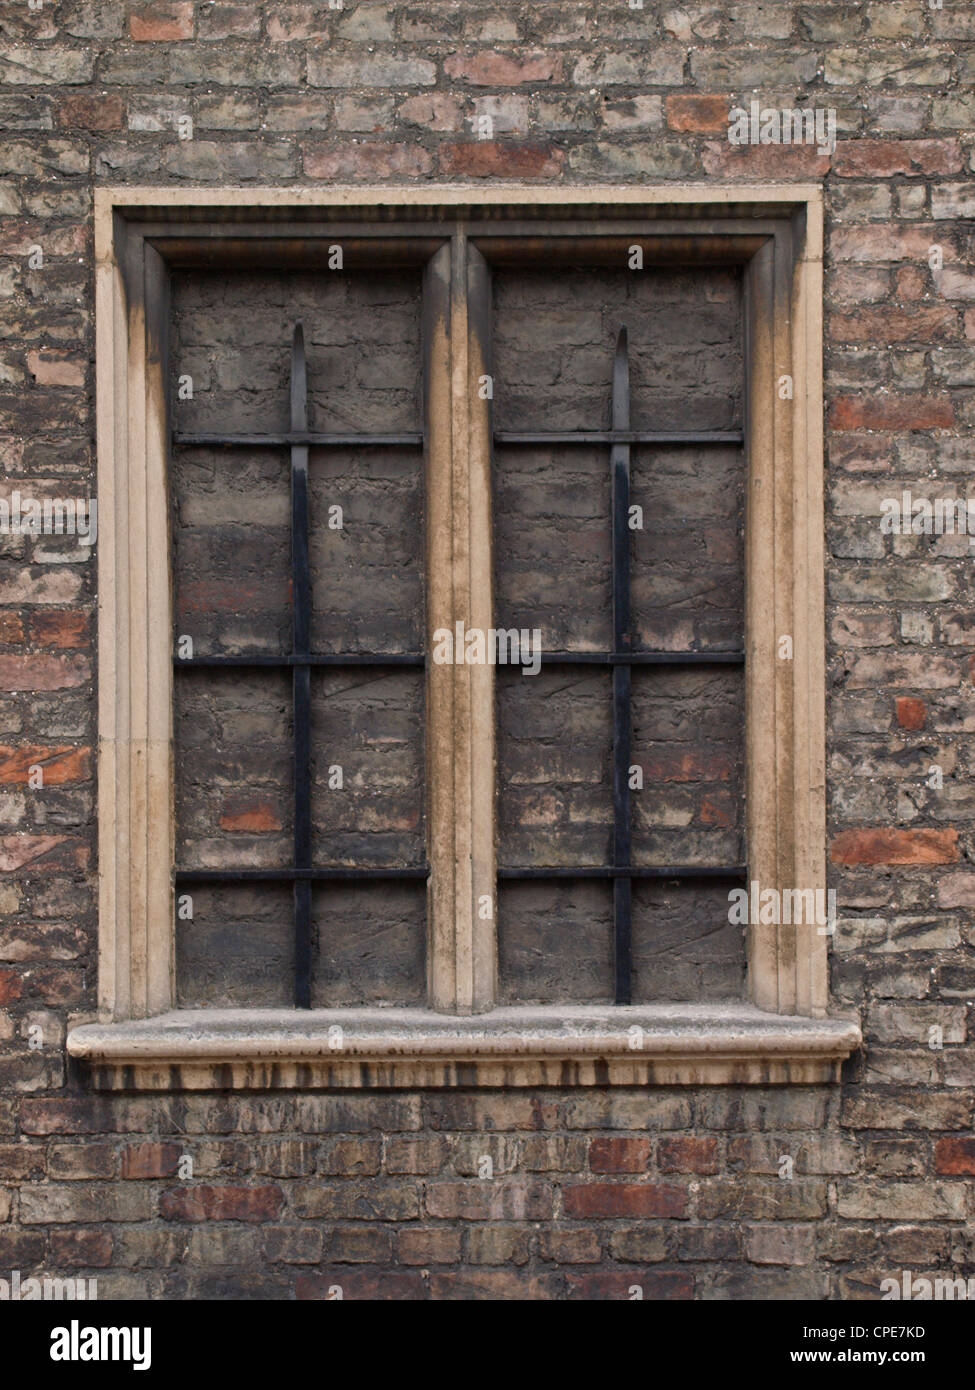 Bricked up window, Cambridge, UK Stock Photo